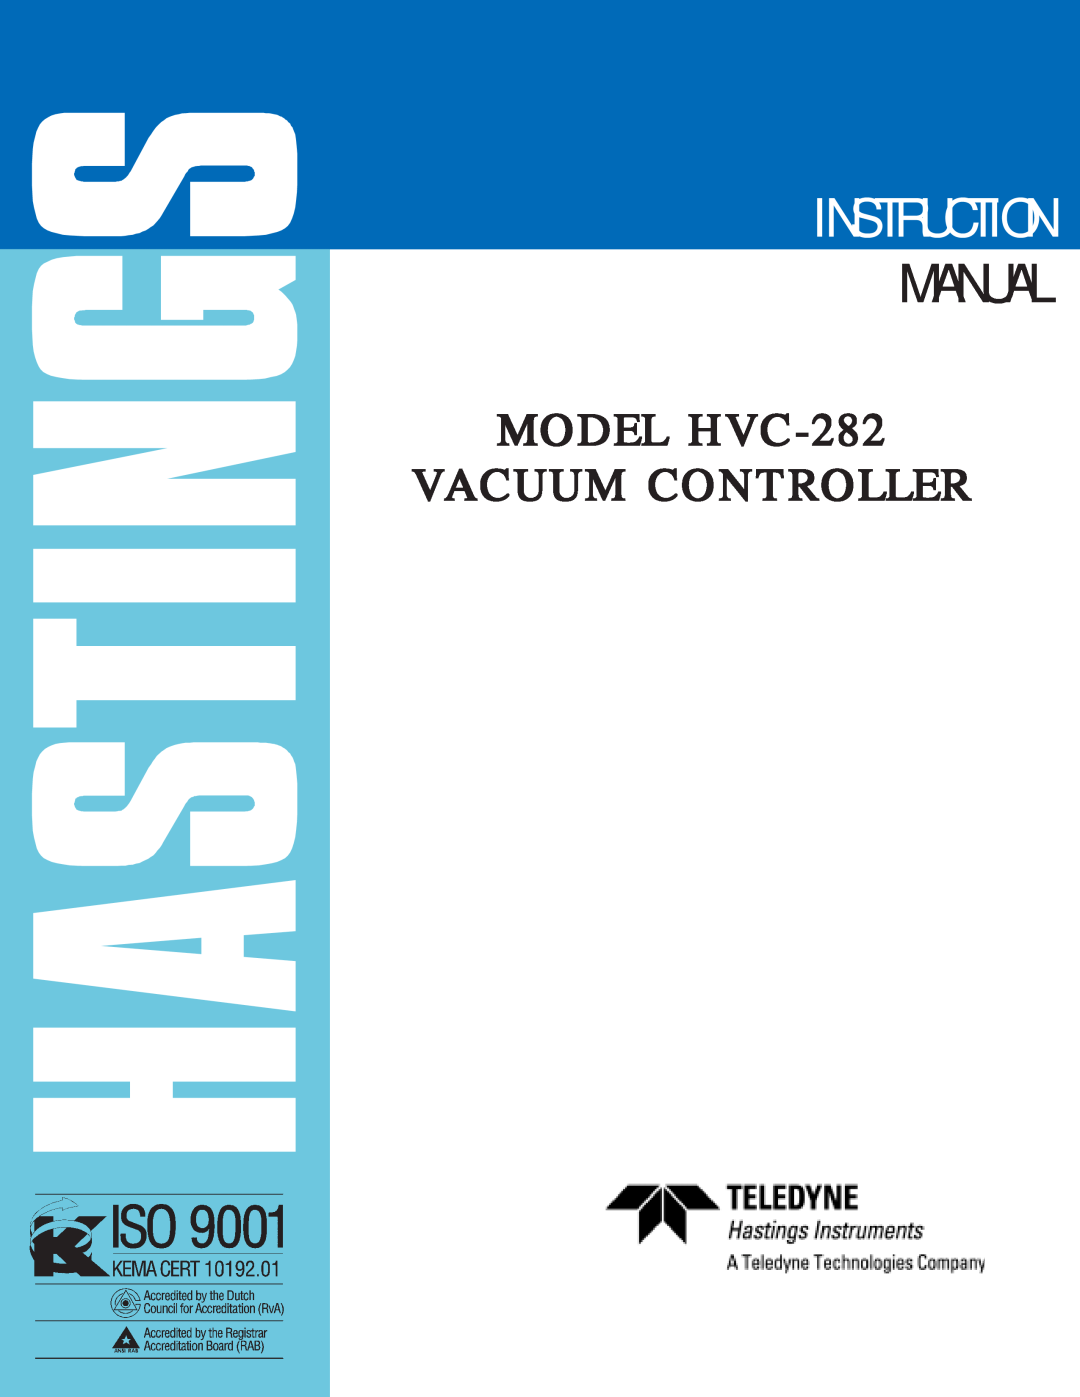 Teledyne instruction manual Instruction, MODEL HVC-282 VACUUM CONTROLLER, Manual 